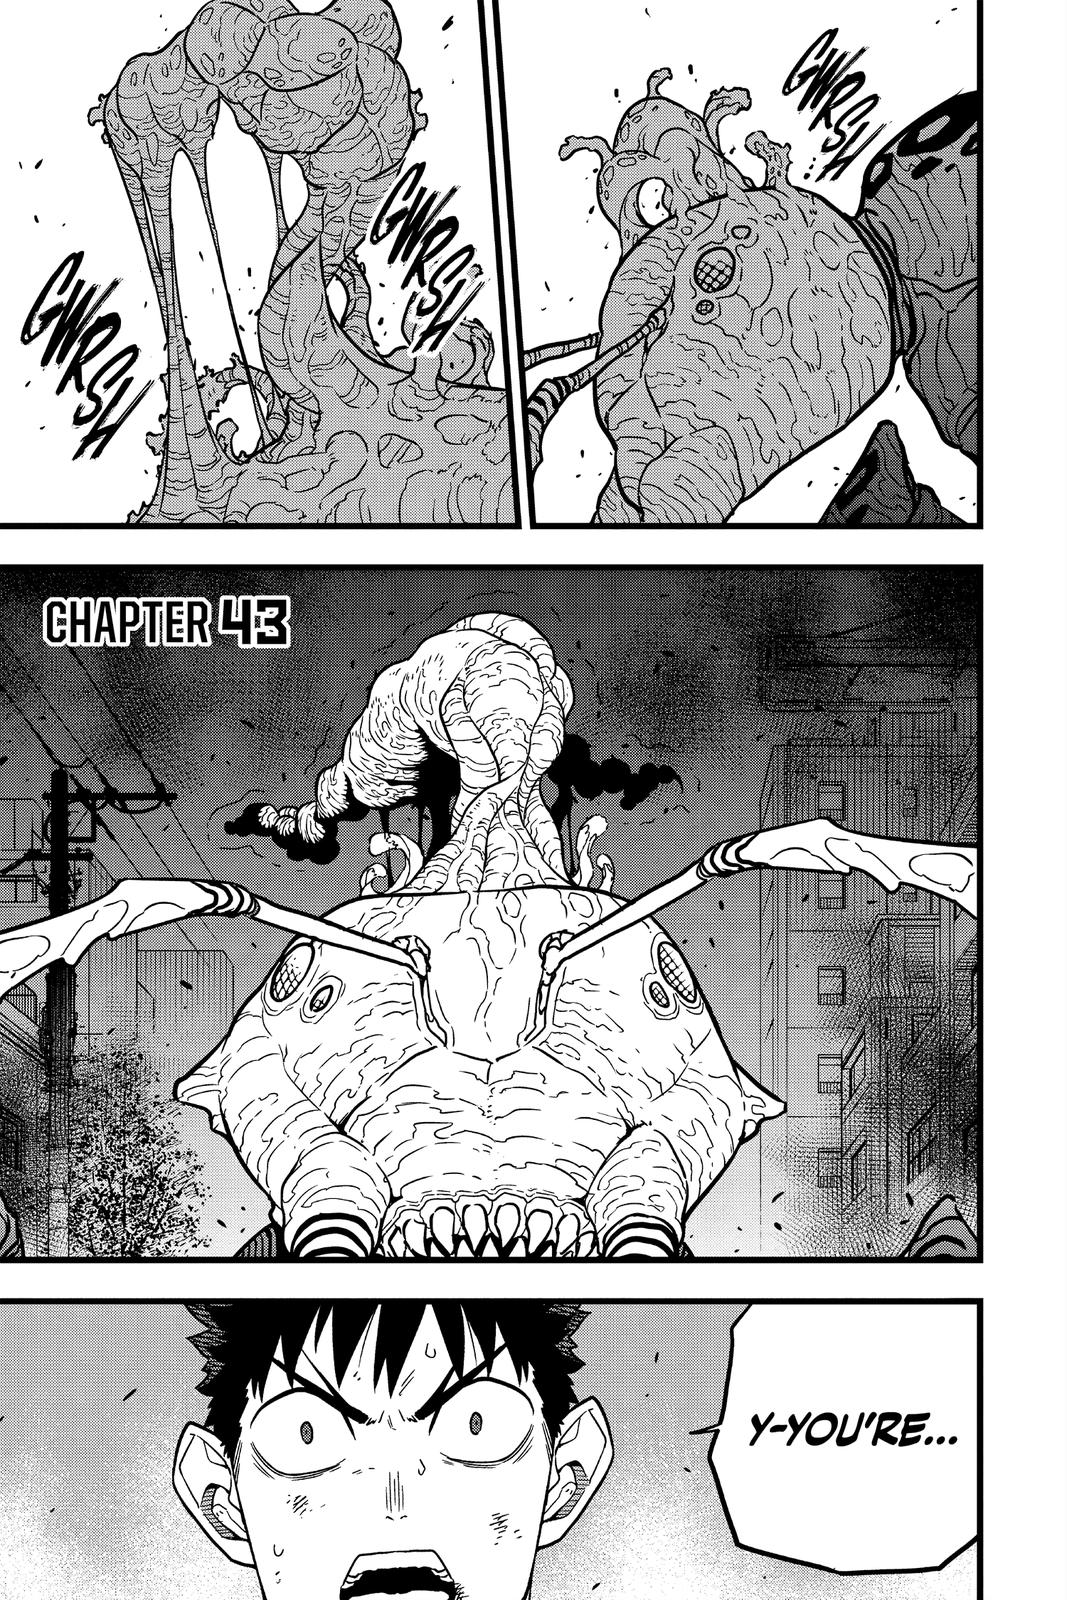 Kaiju No. 8, Chapter 43 image 01